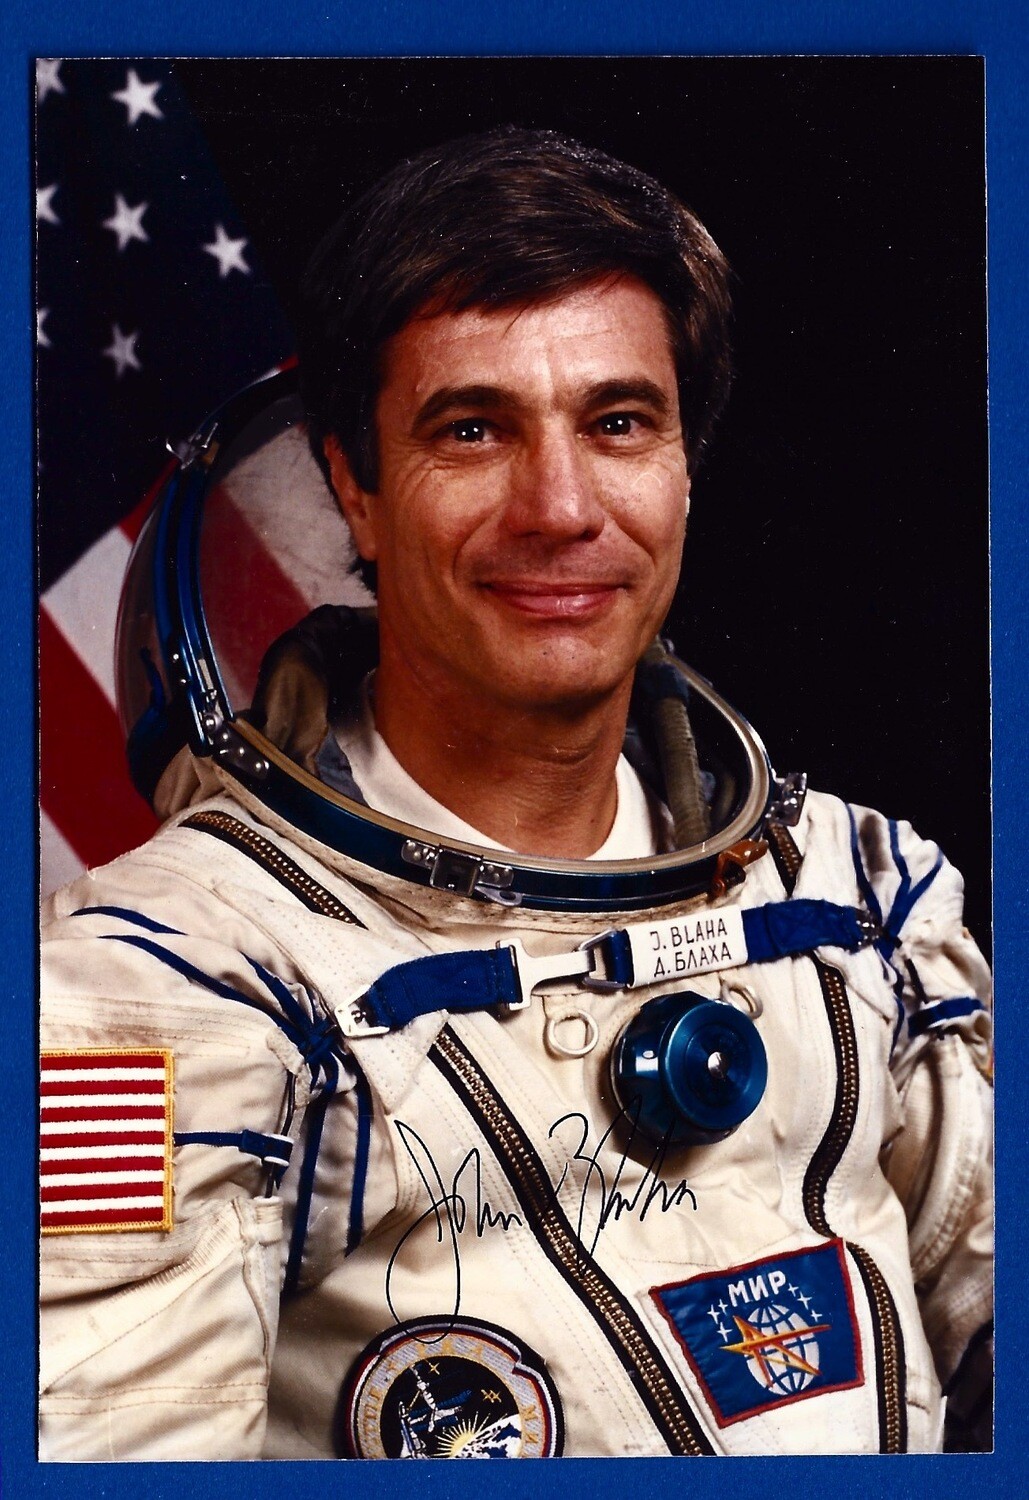 John Blaha NASA astronaut signed picture